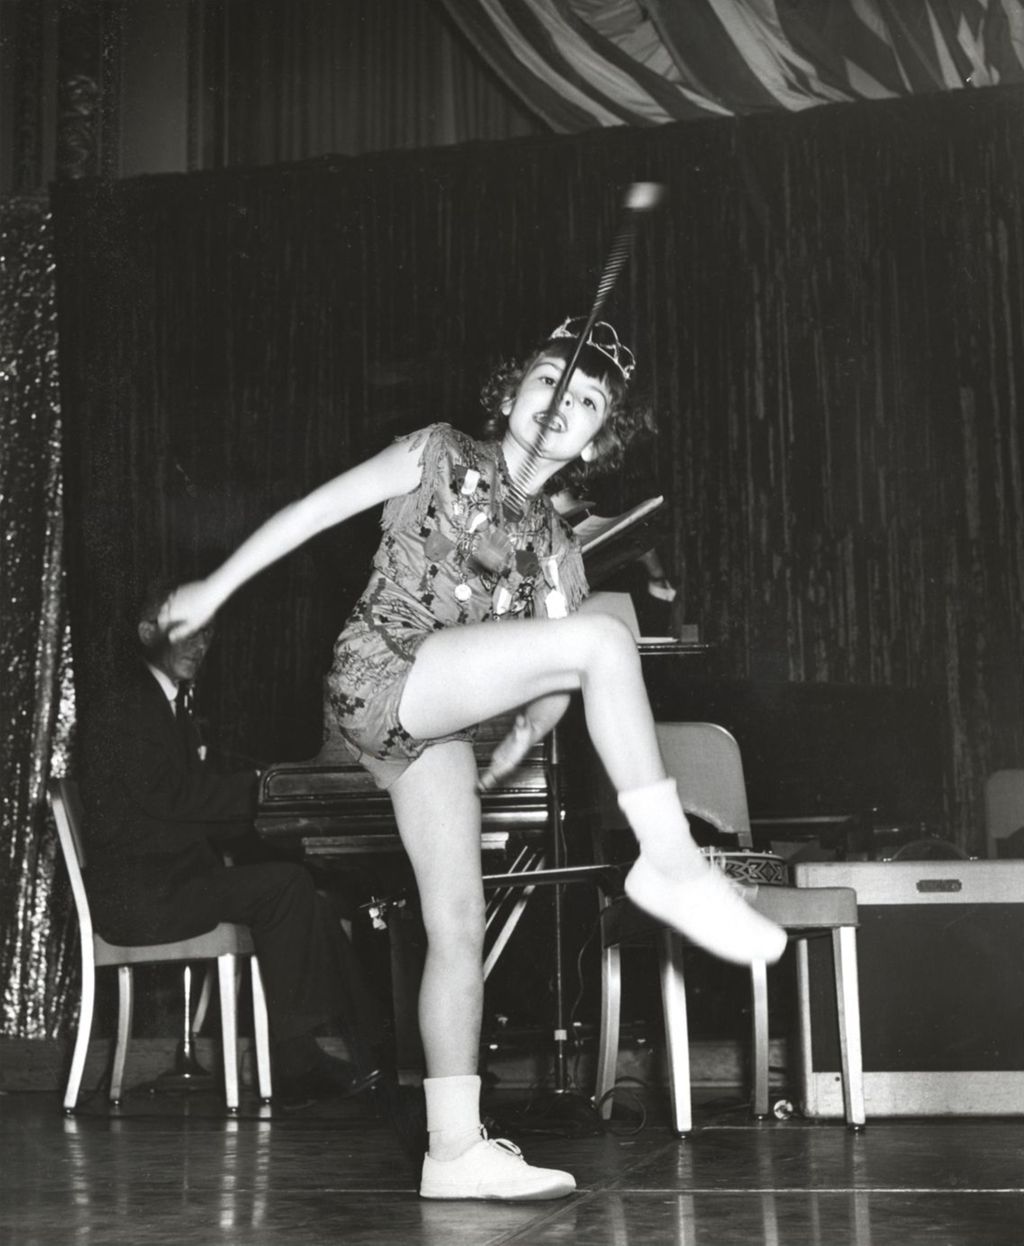 Miniature of Linda Crane twirling a baton on stage